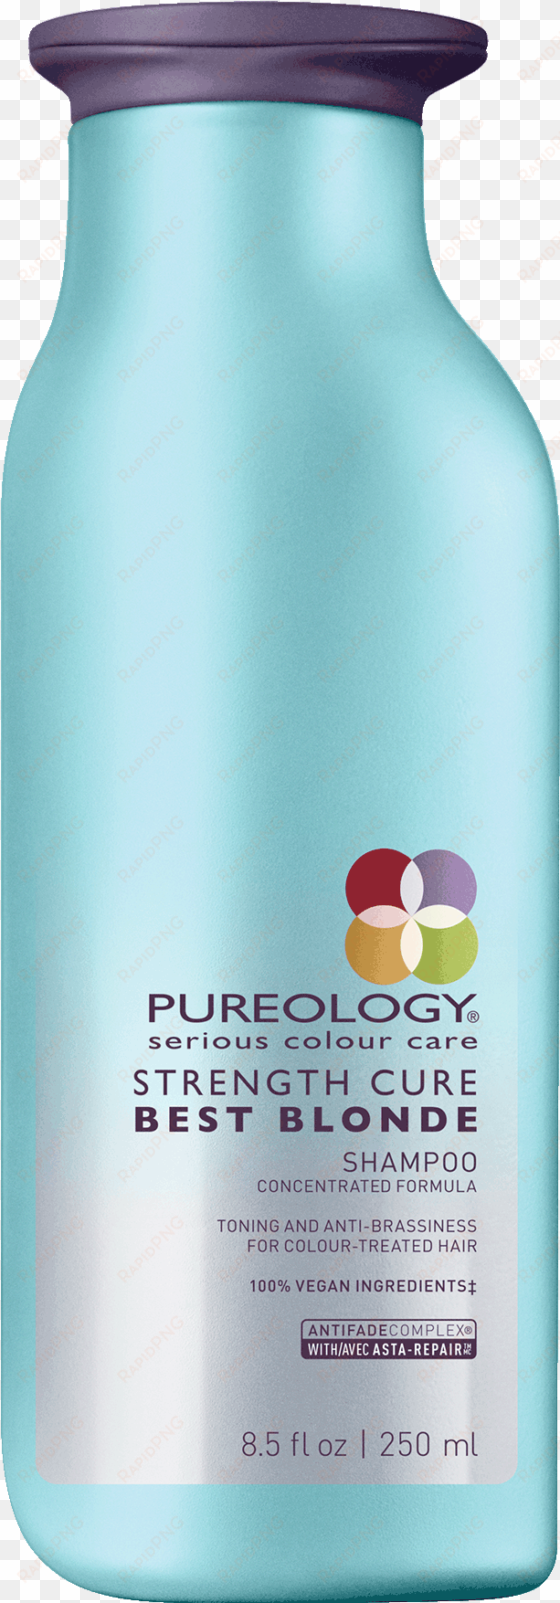 pureology strength cure best blonde purple shampoo - pureology clean volume shampoo